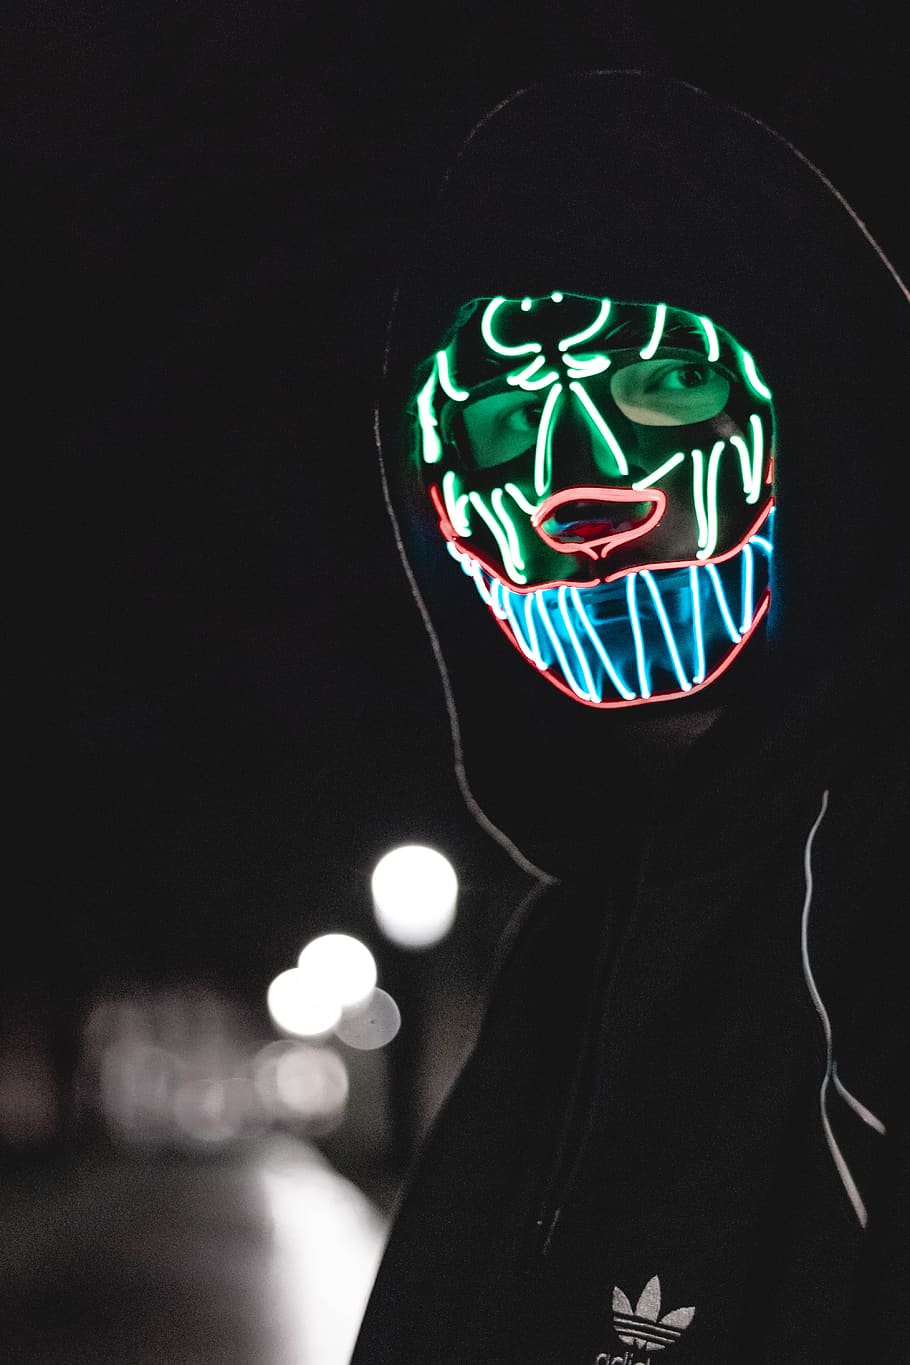 Joker mask 1080P, 2K, 4K, 5K HD wallpaper free download